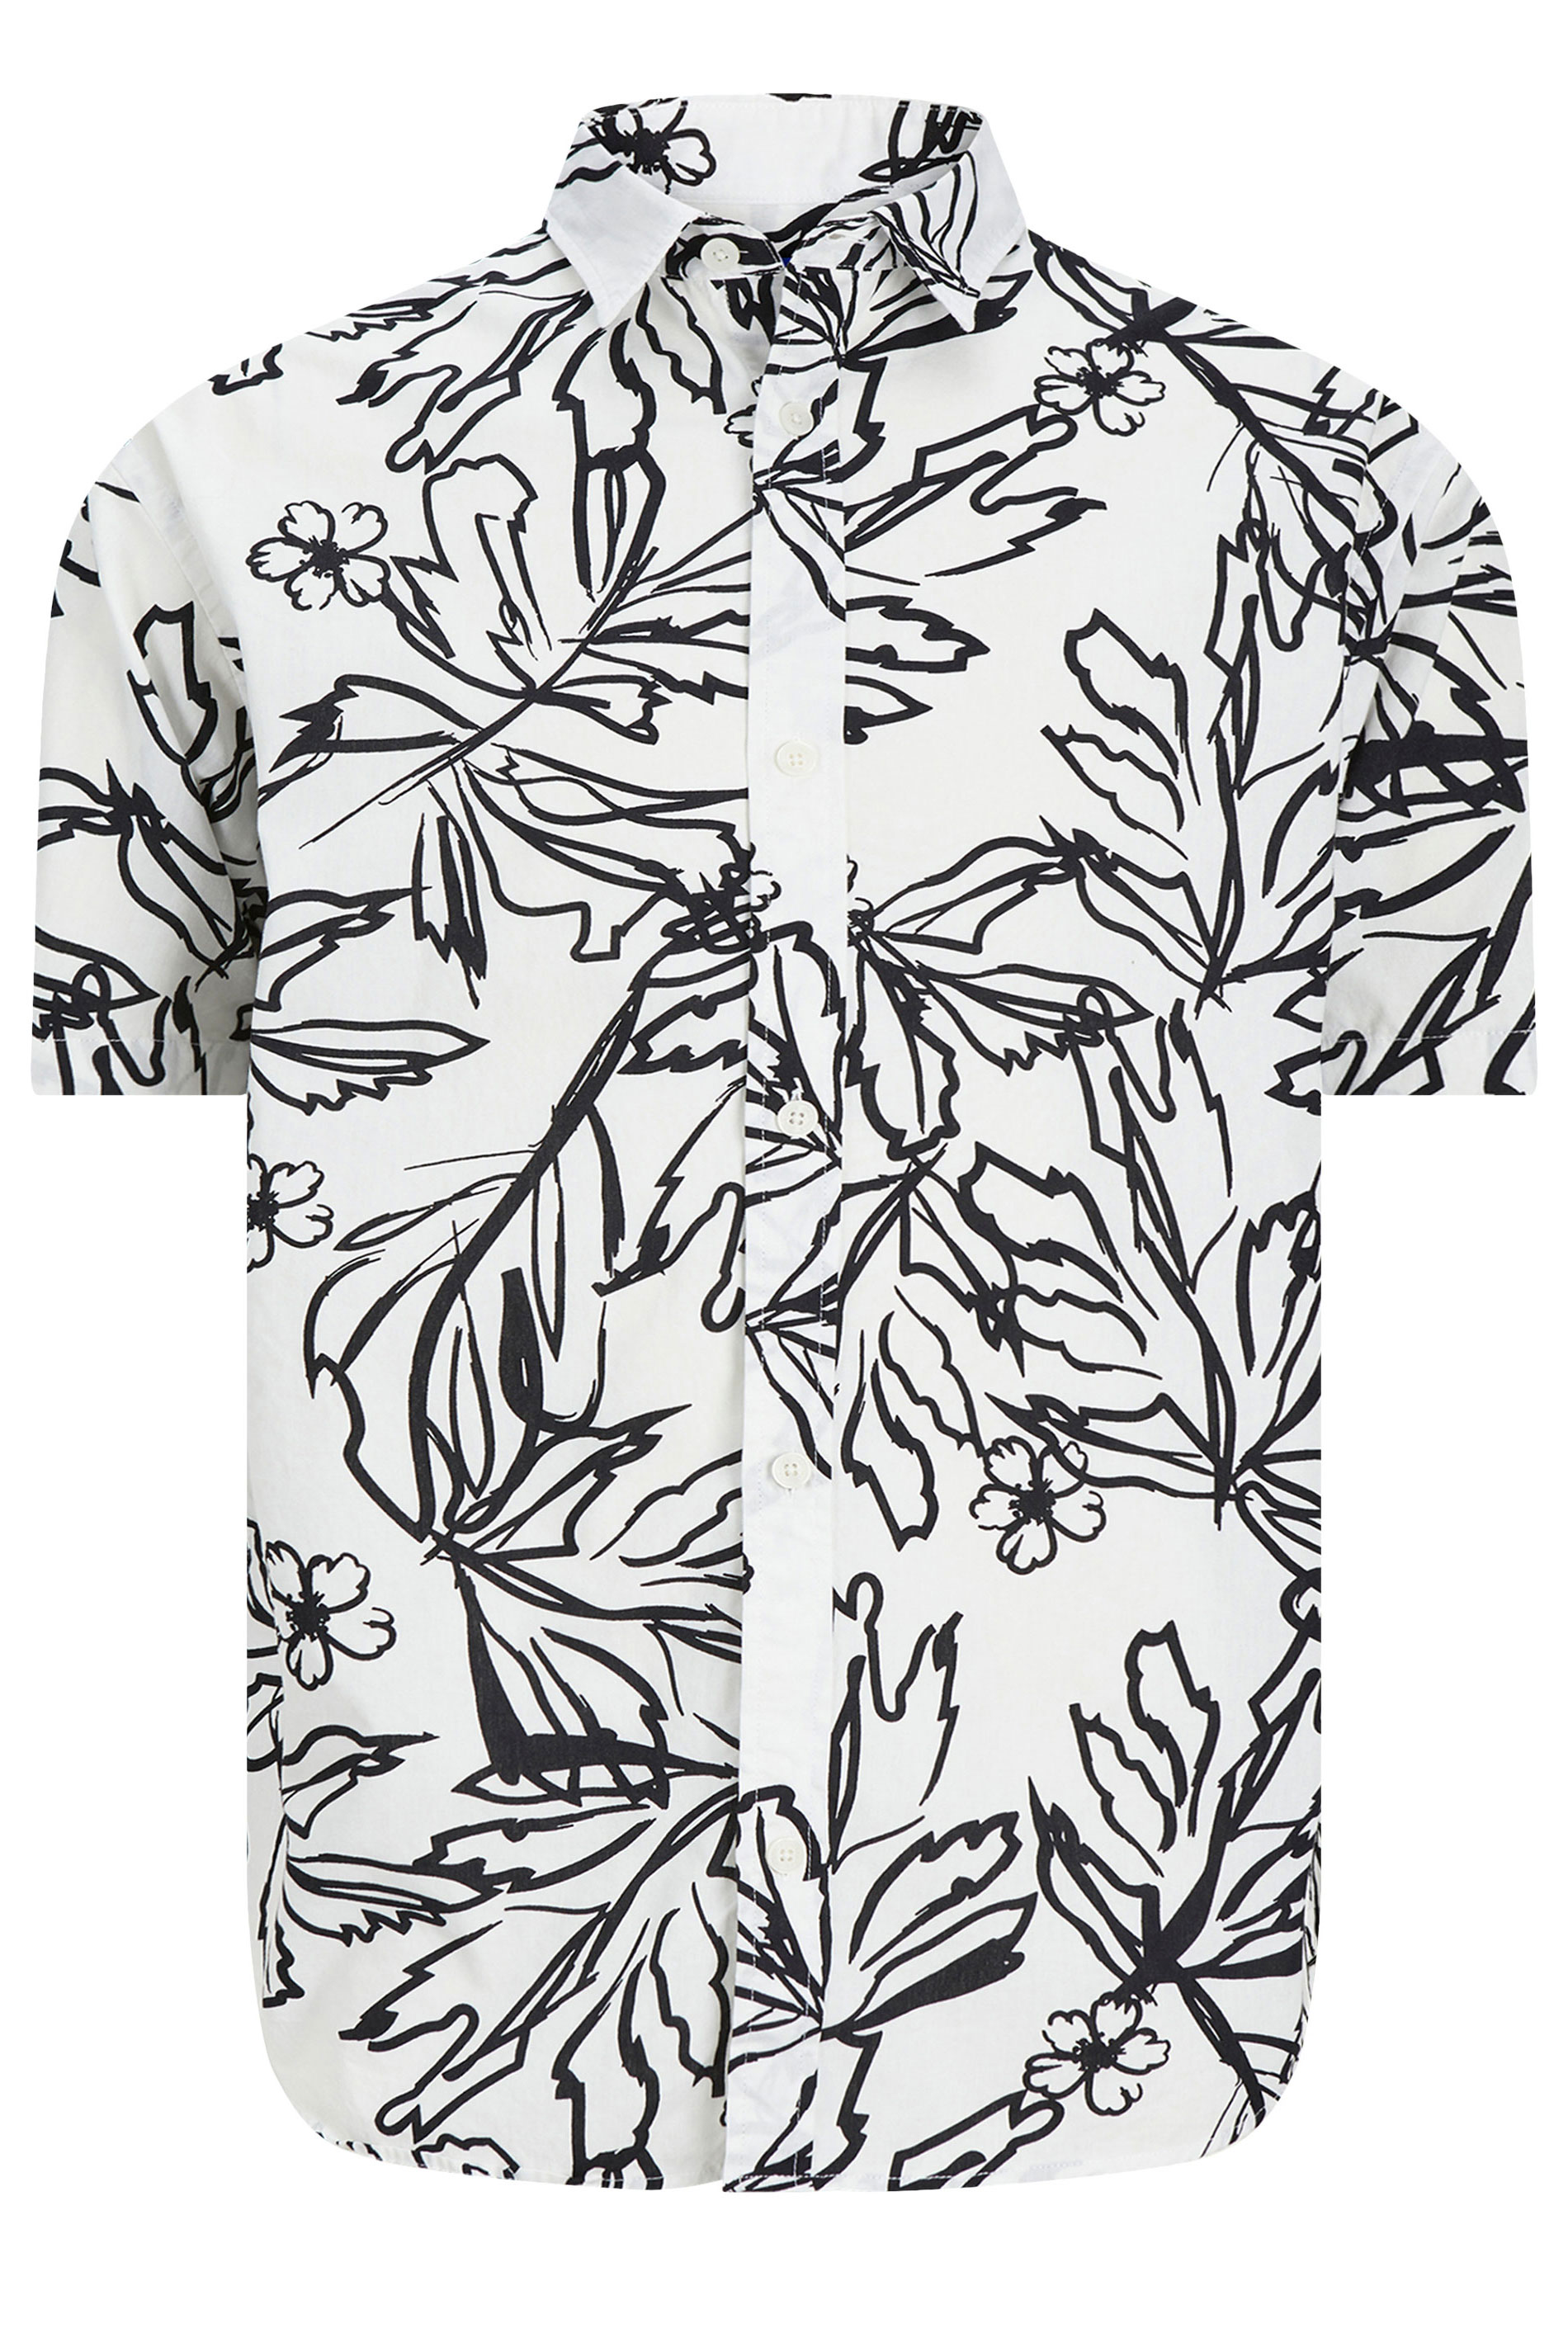 JACK & JONES Big & Tall White Tropical Printed Shirt | BadRhino 3